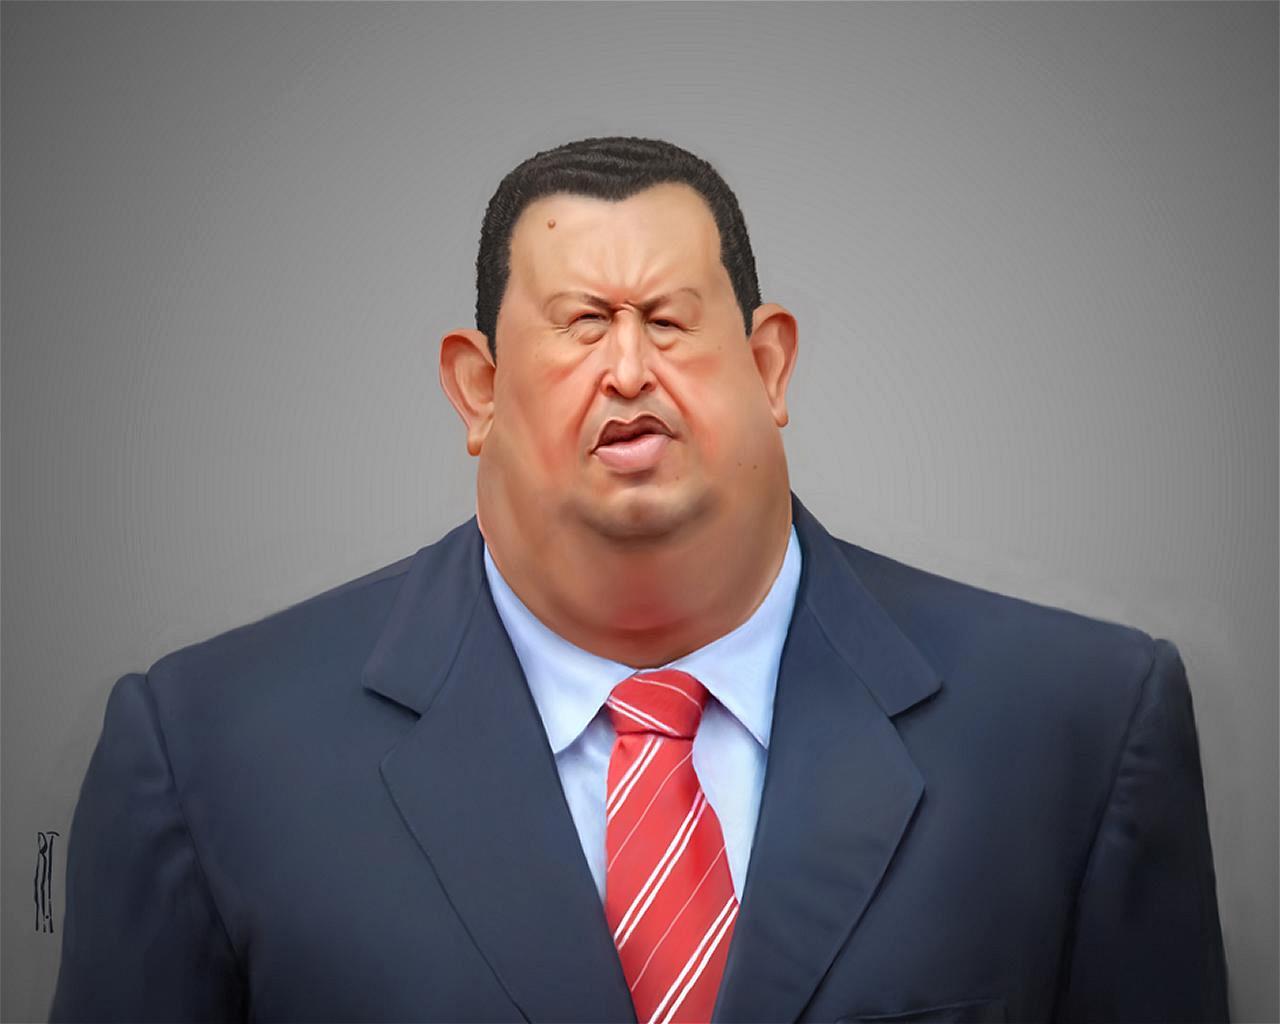 Wallpaper Funny Hugo Chavez Caricature x 1024